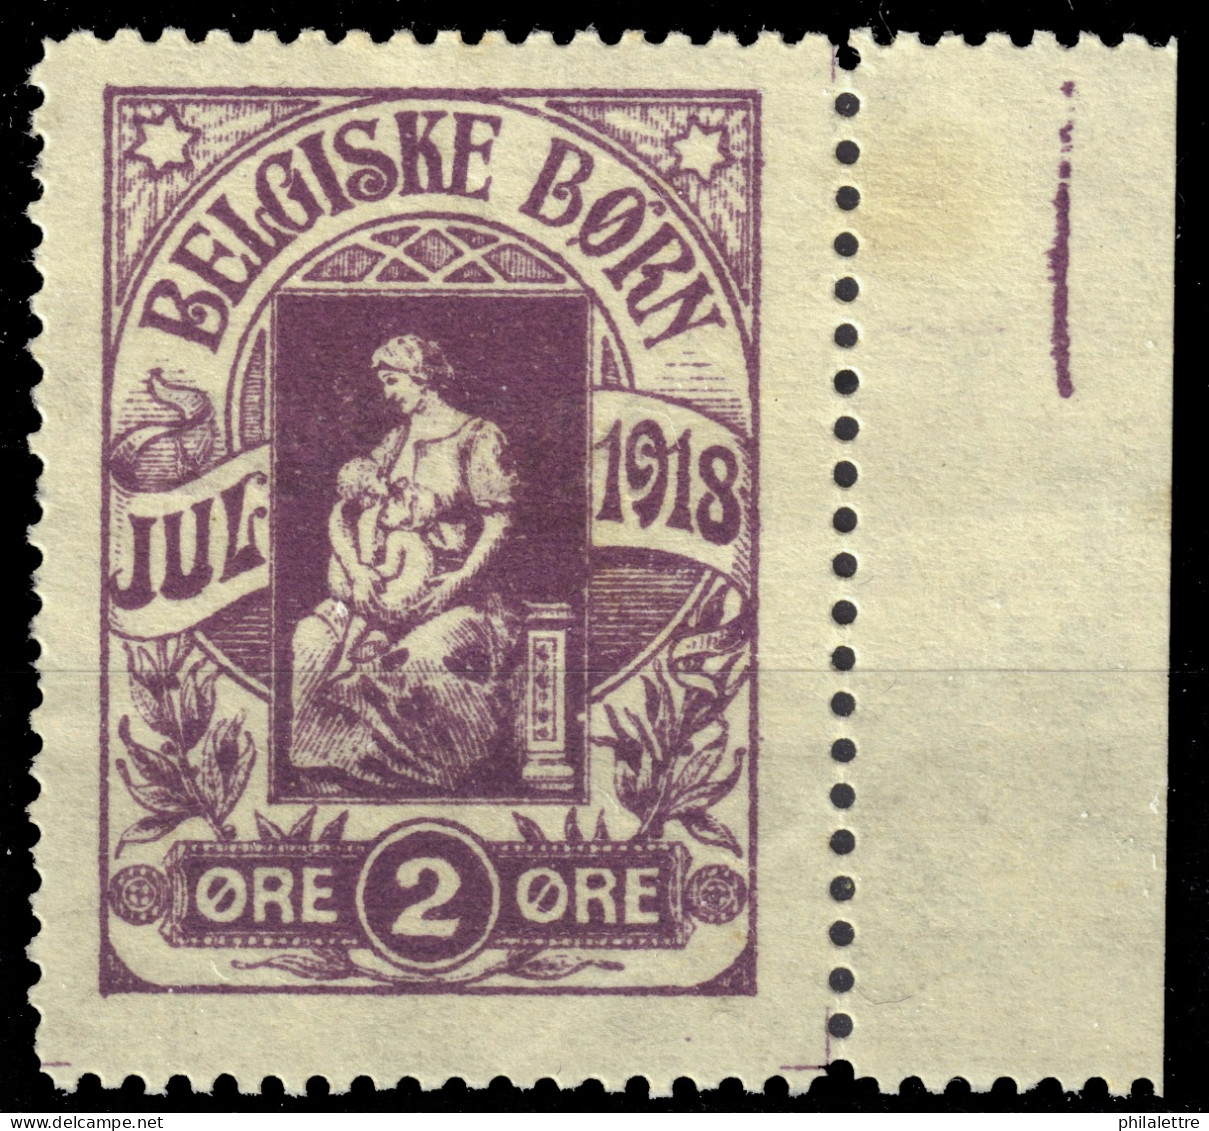 DANEMARK / DENMARK - Christmas 1918 - 2øre Purple "BELGISKE BØRN" (Belgian Children) Charity Stamp (marked NORGE On Gum) - Weihnachten